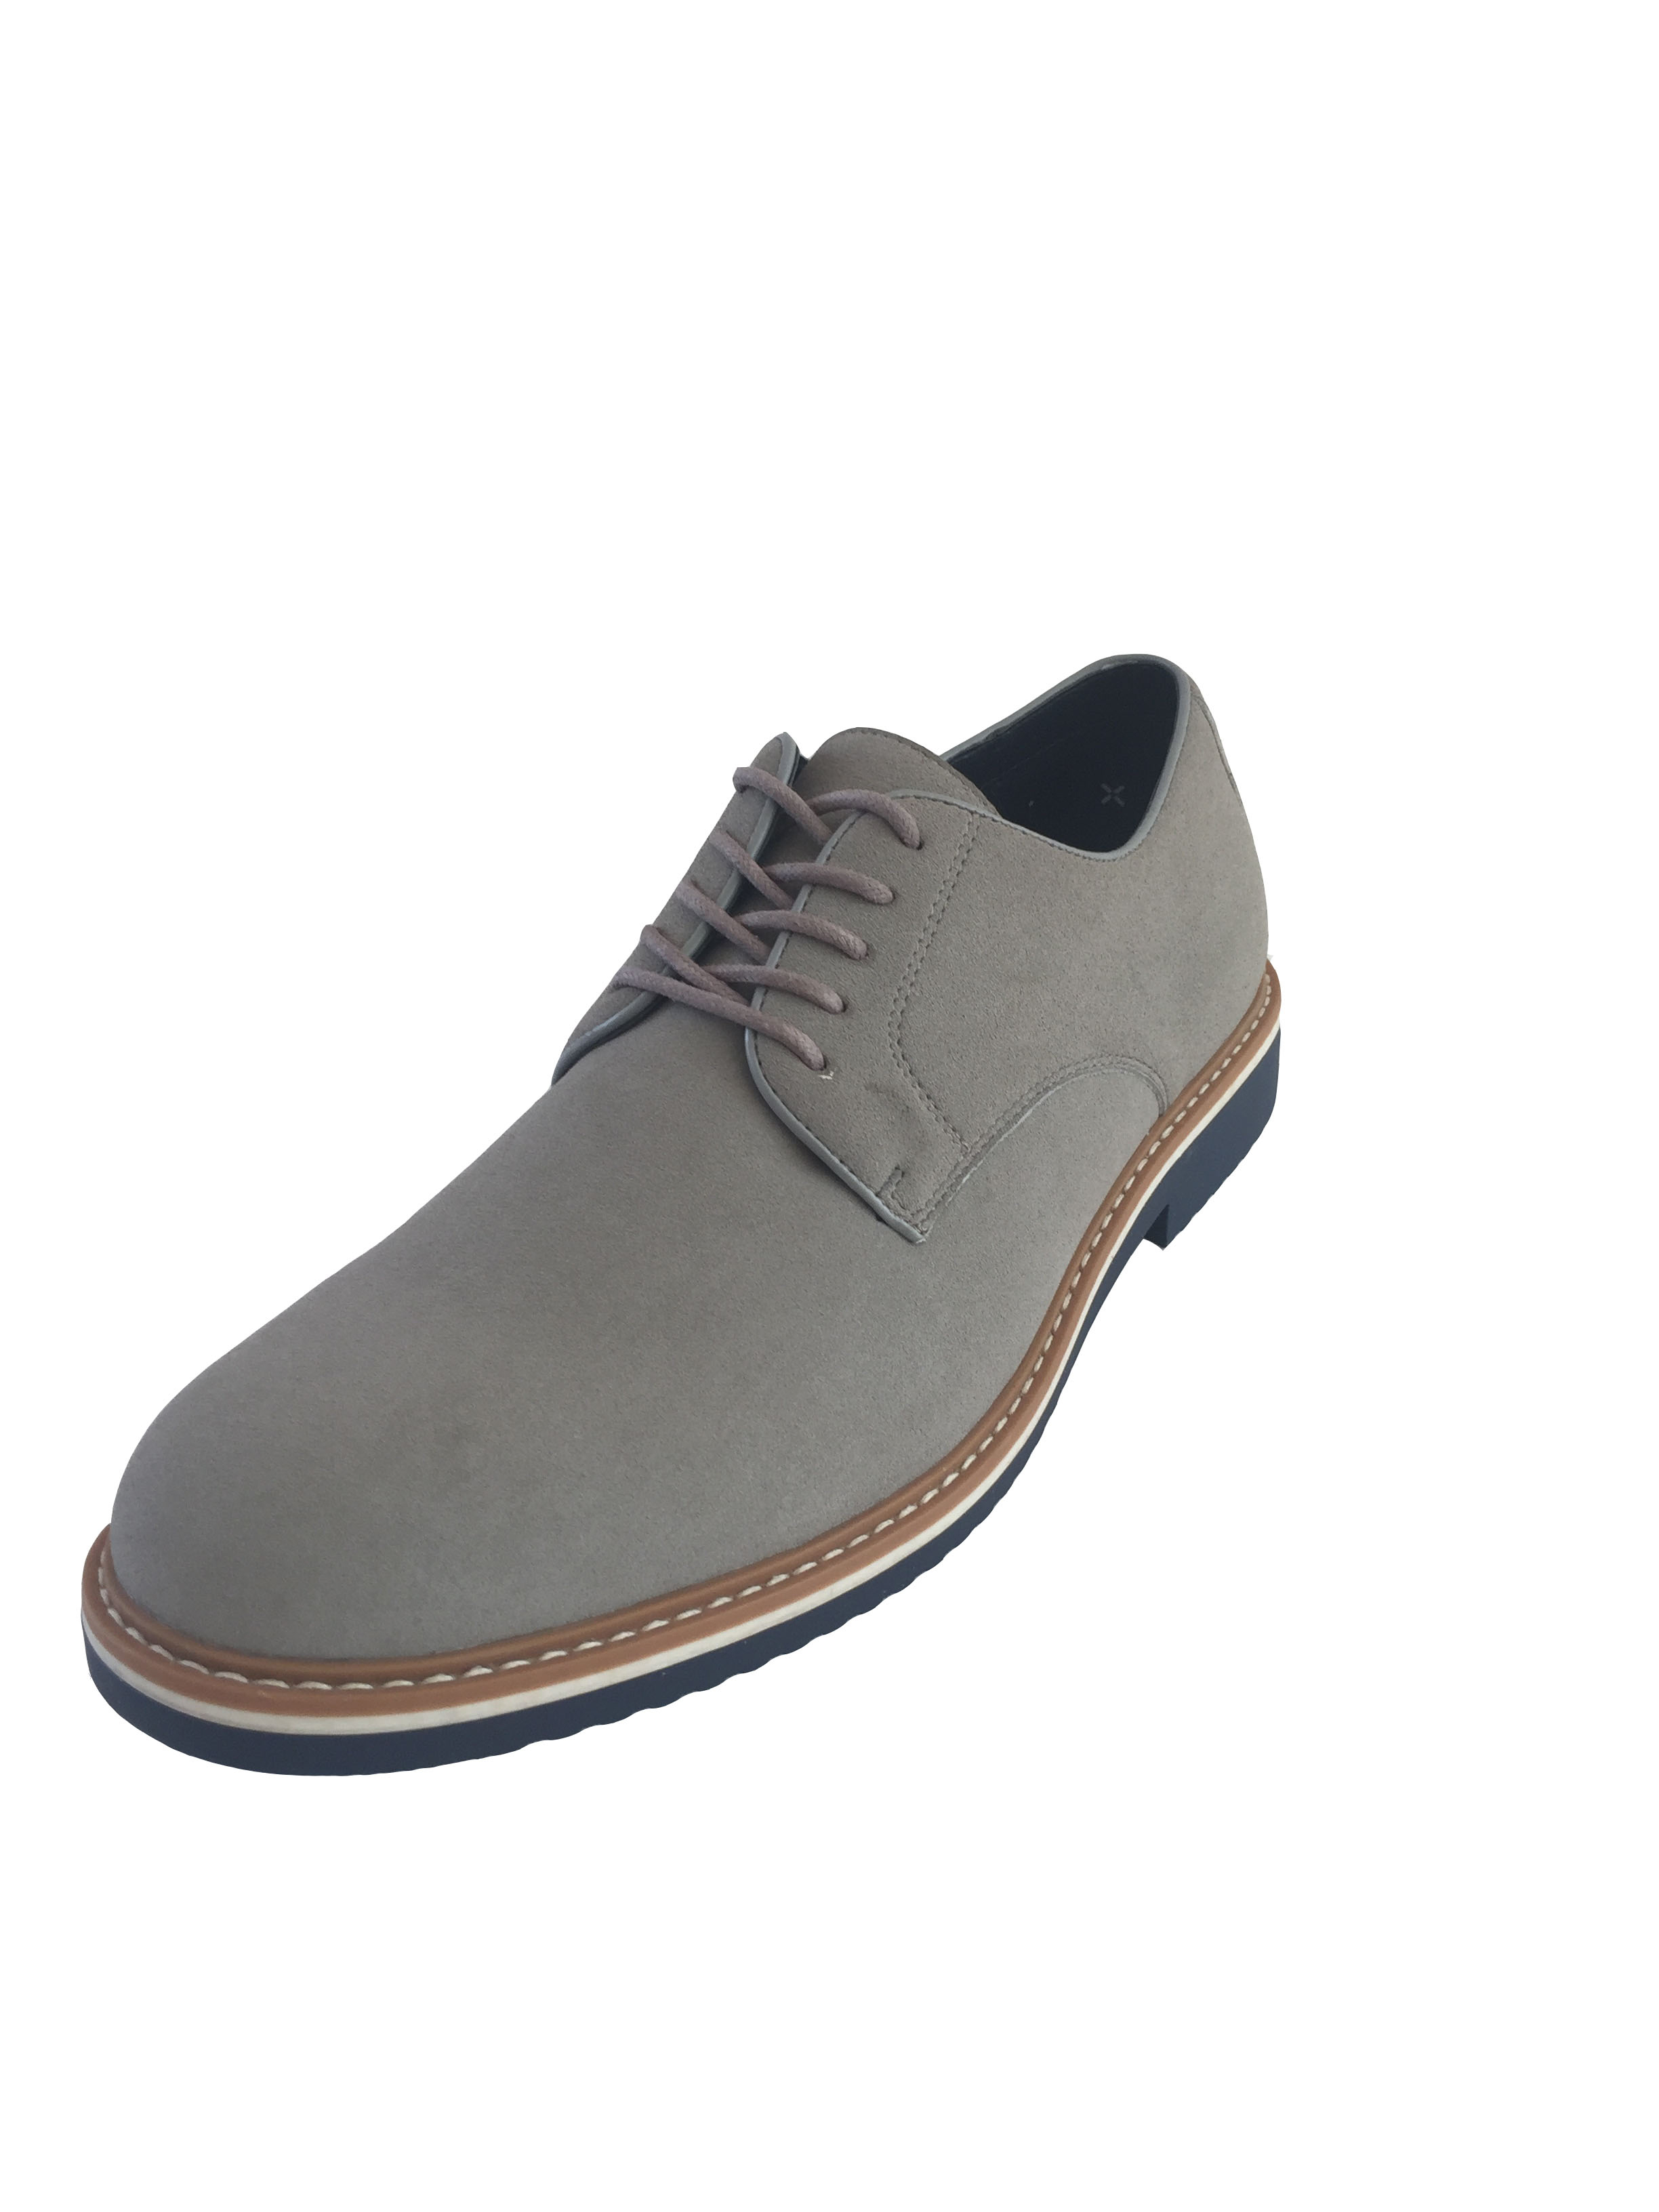 George Men's Plain Toe Casual Oxford Shoe - image 1 of 4